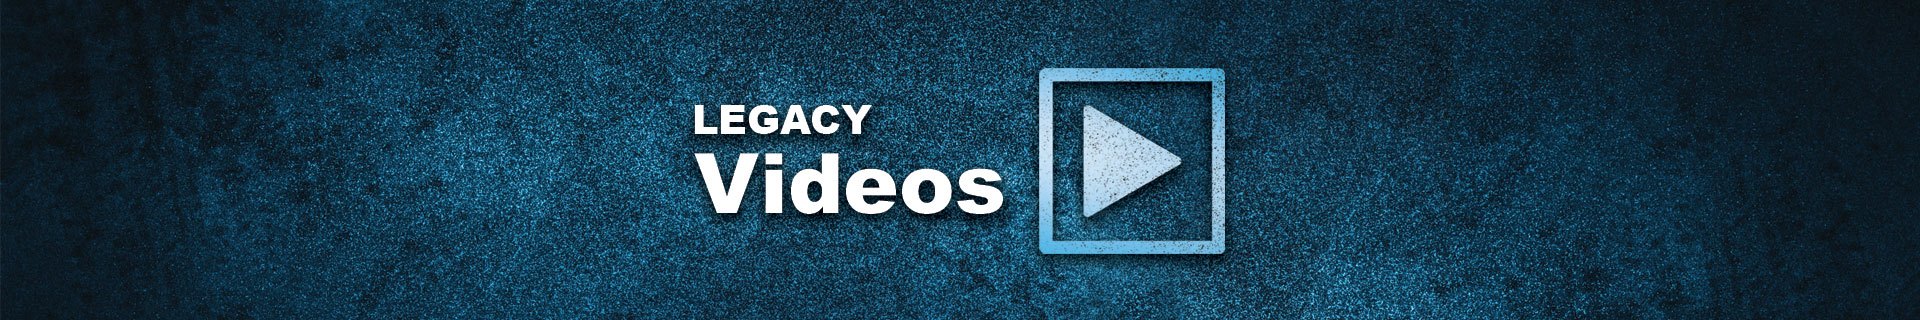 legacy videos page masthead